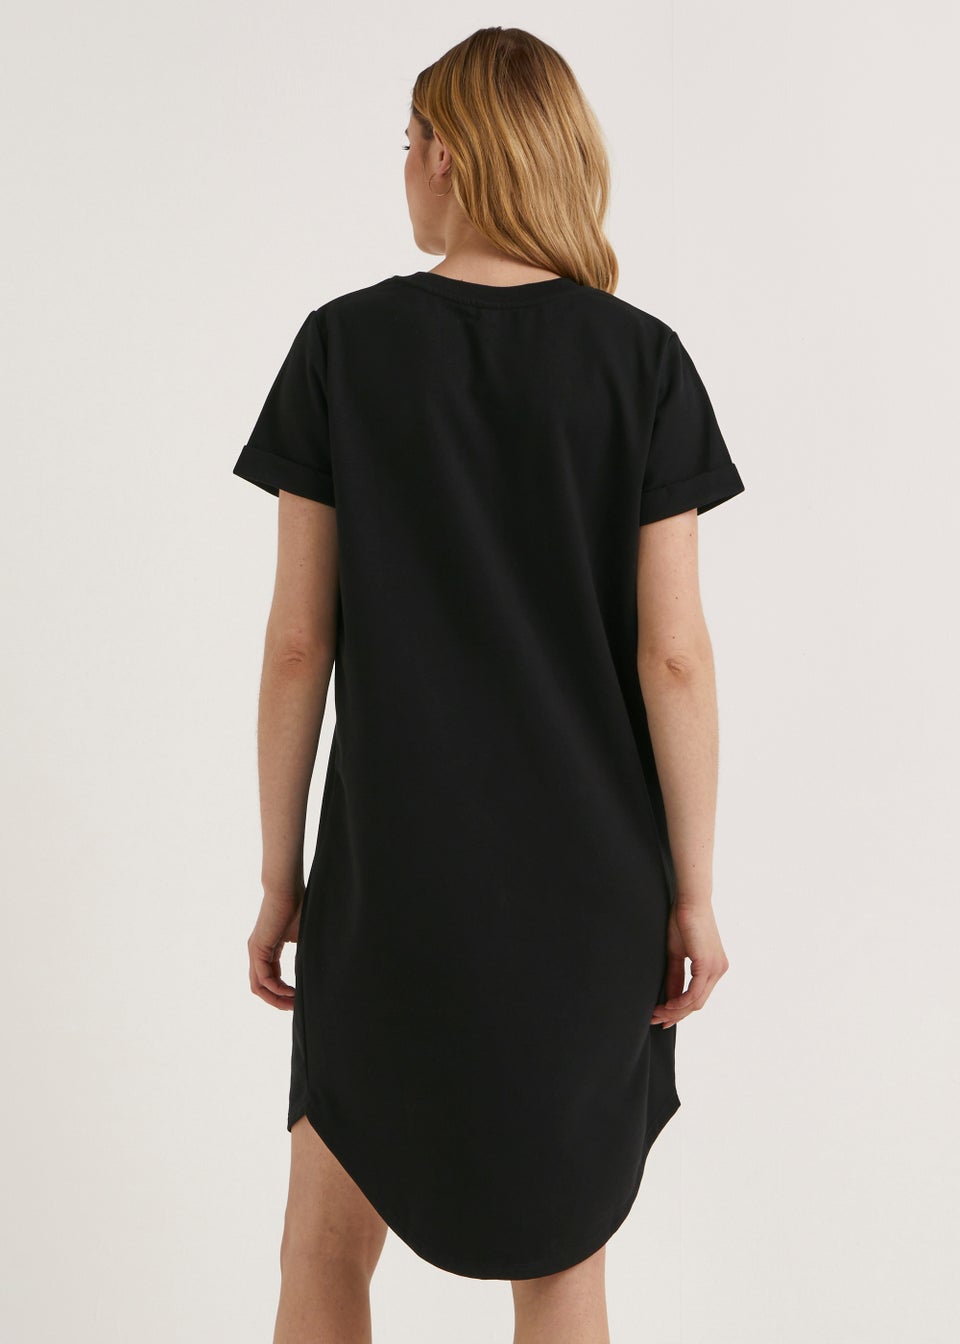 JDY Ivy Black Short Sleeve Dress